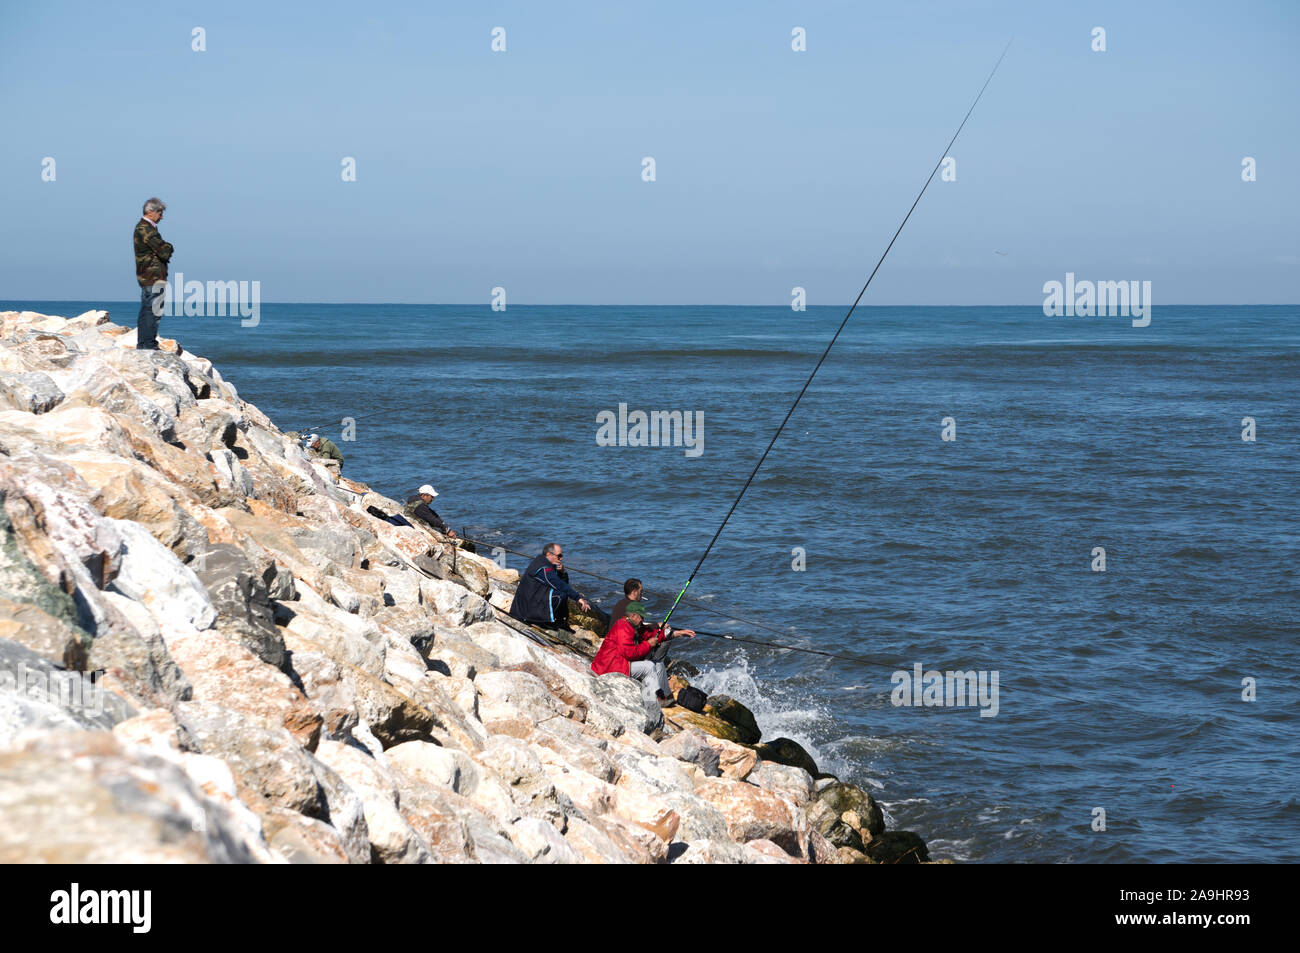 Nuovo Porto Marina di Pisa, Italie, pêcheurs à l'embouchure de la rivière Arno, à l'entrée de la mer Ligure, l'UE Banque D'Images